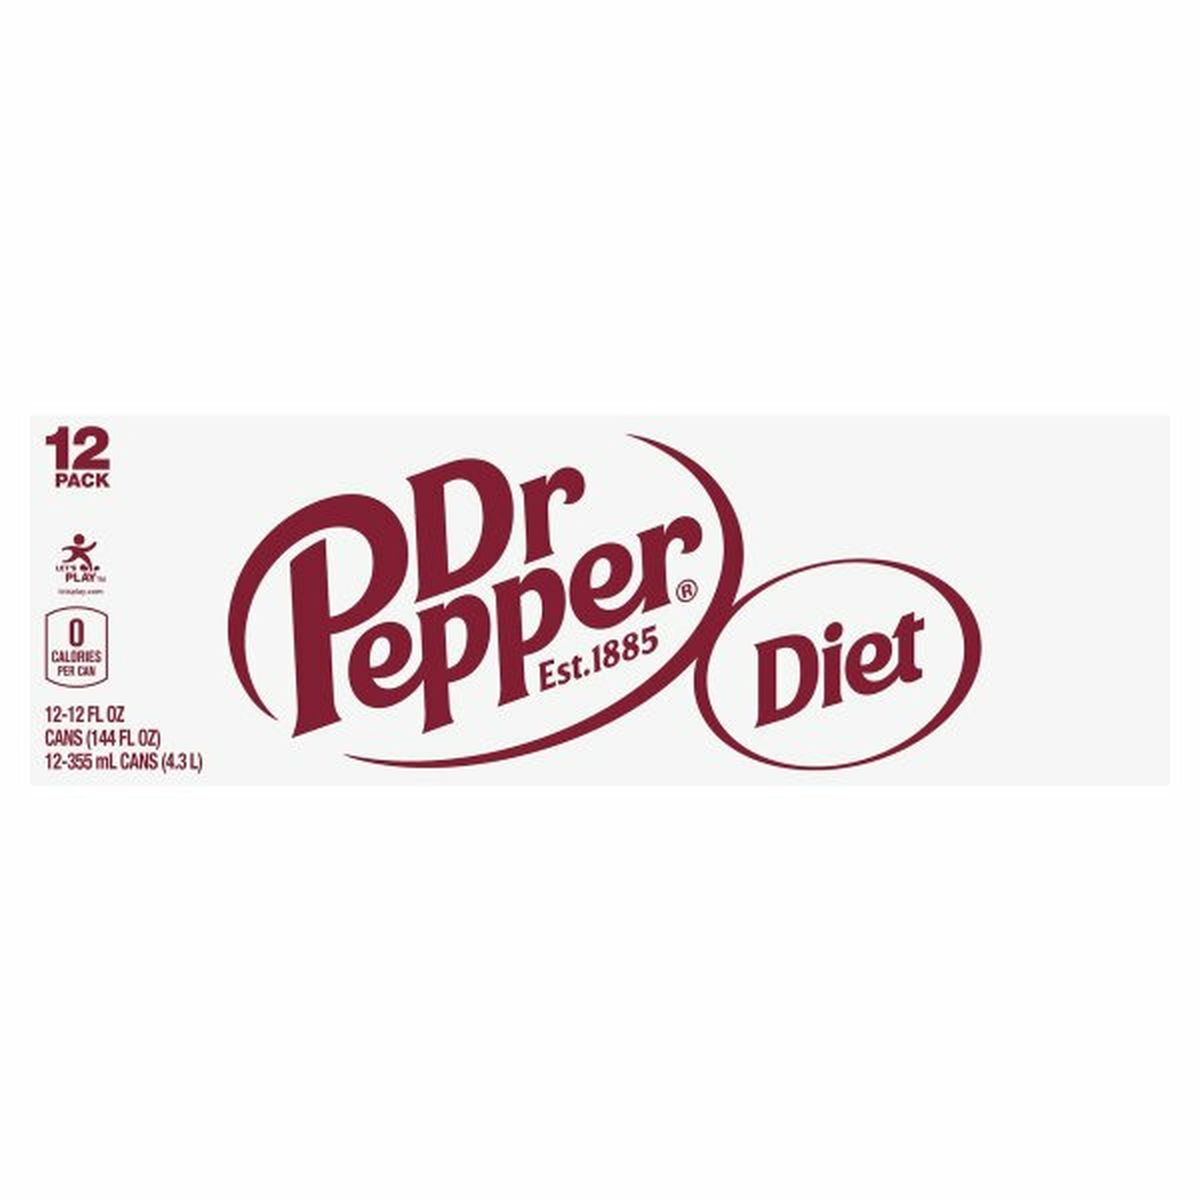 Calories in Diet Dr. Pepper Diet Dr Pepper Soda, Diet, 12 Pack